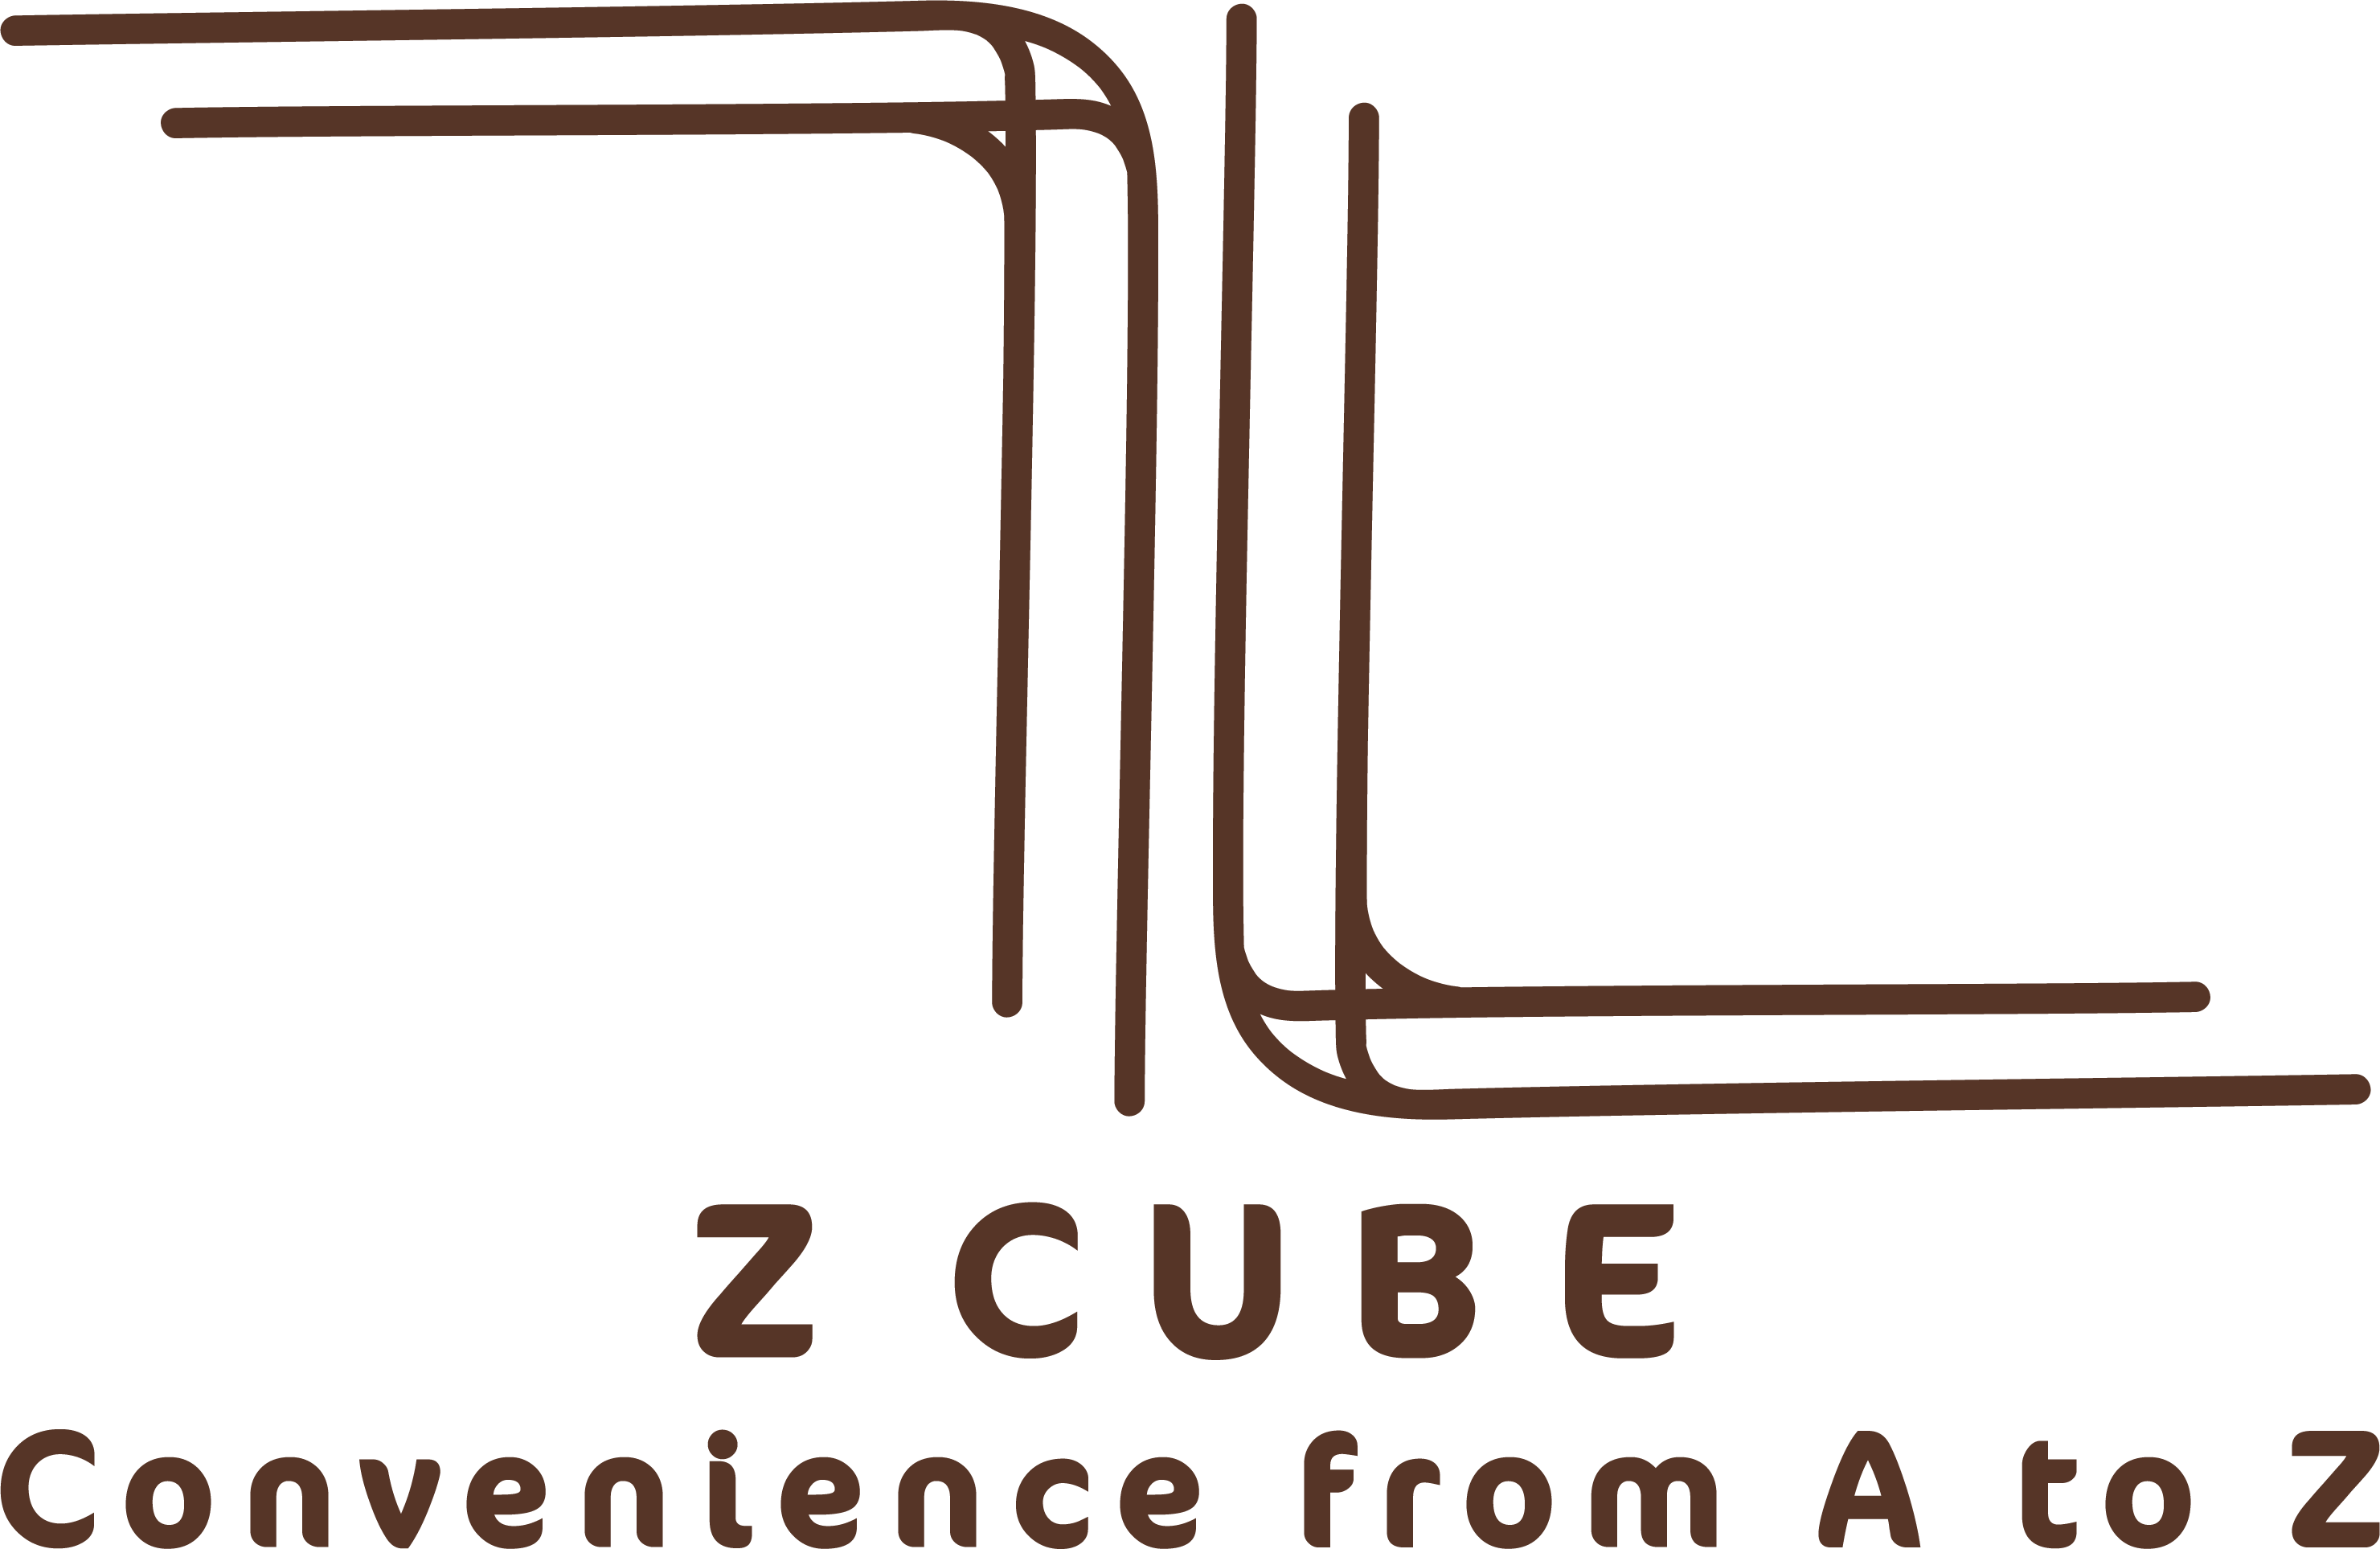 Z Cube